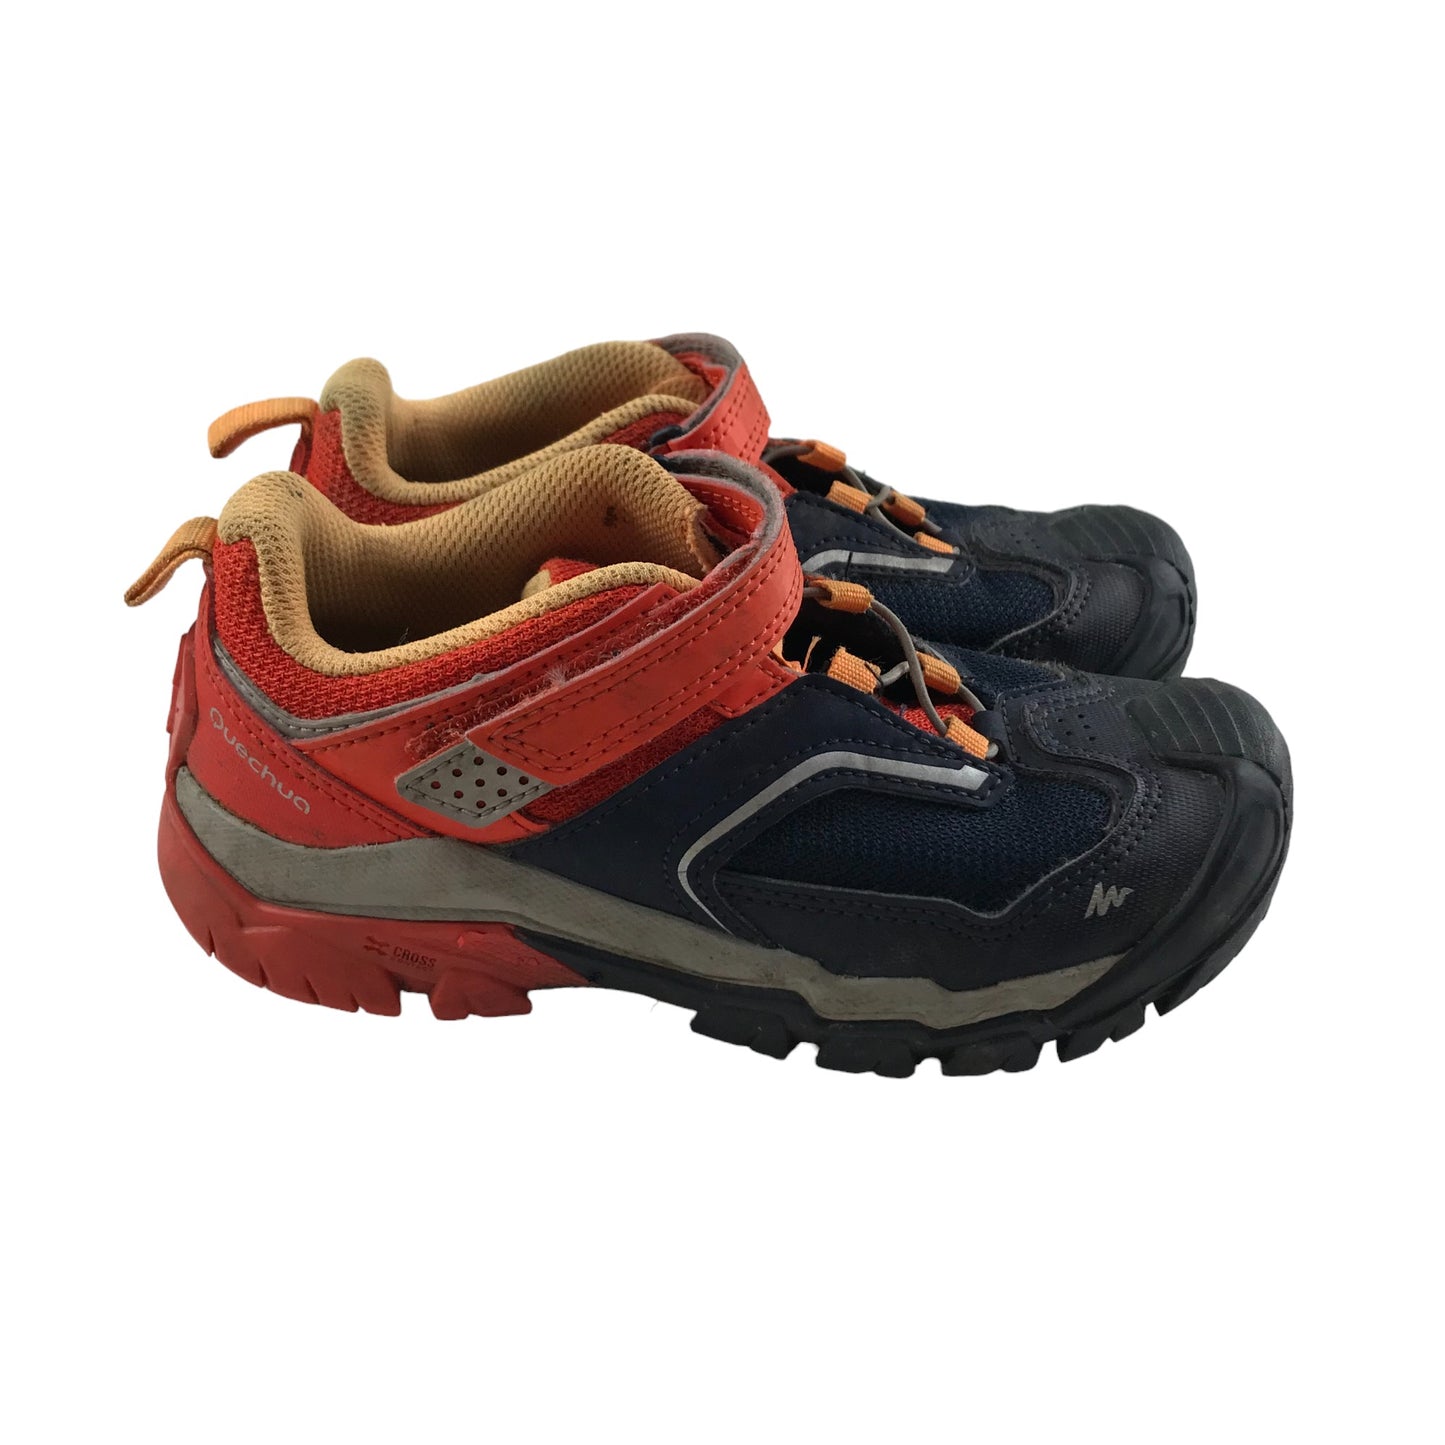 Decathlon Walking Shoes Shoe Size 12 Junior Navy and Orange CrossRock